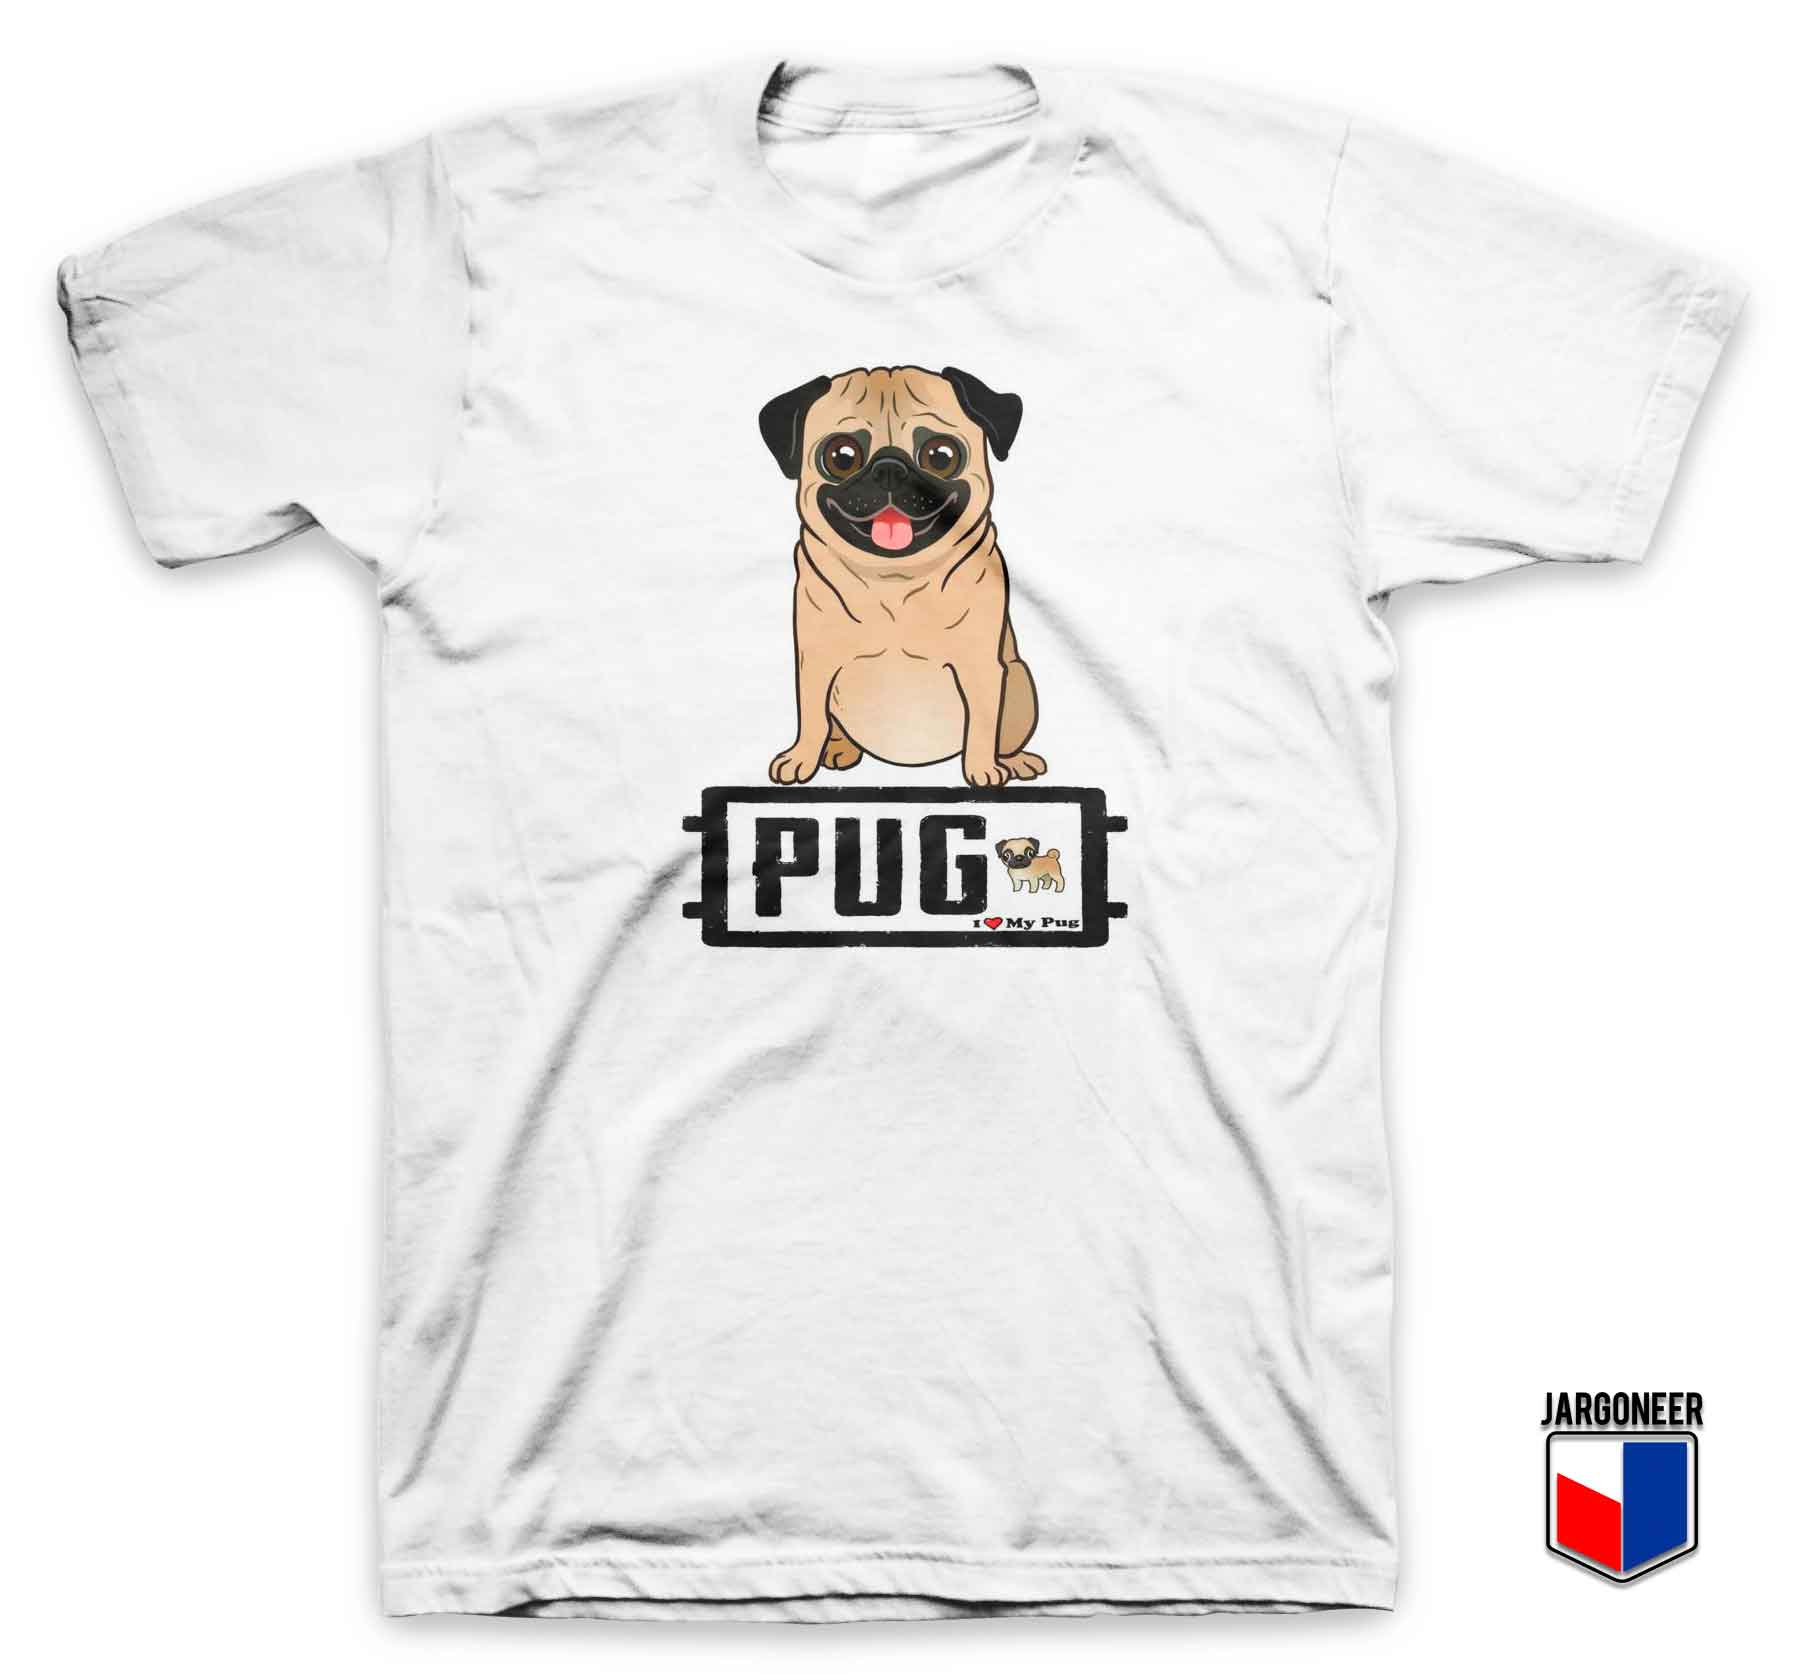 I Love My Pug T Shirt - Shop Unique Graphic Cool Shirt Designs